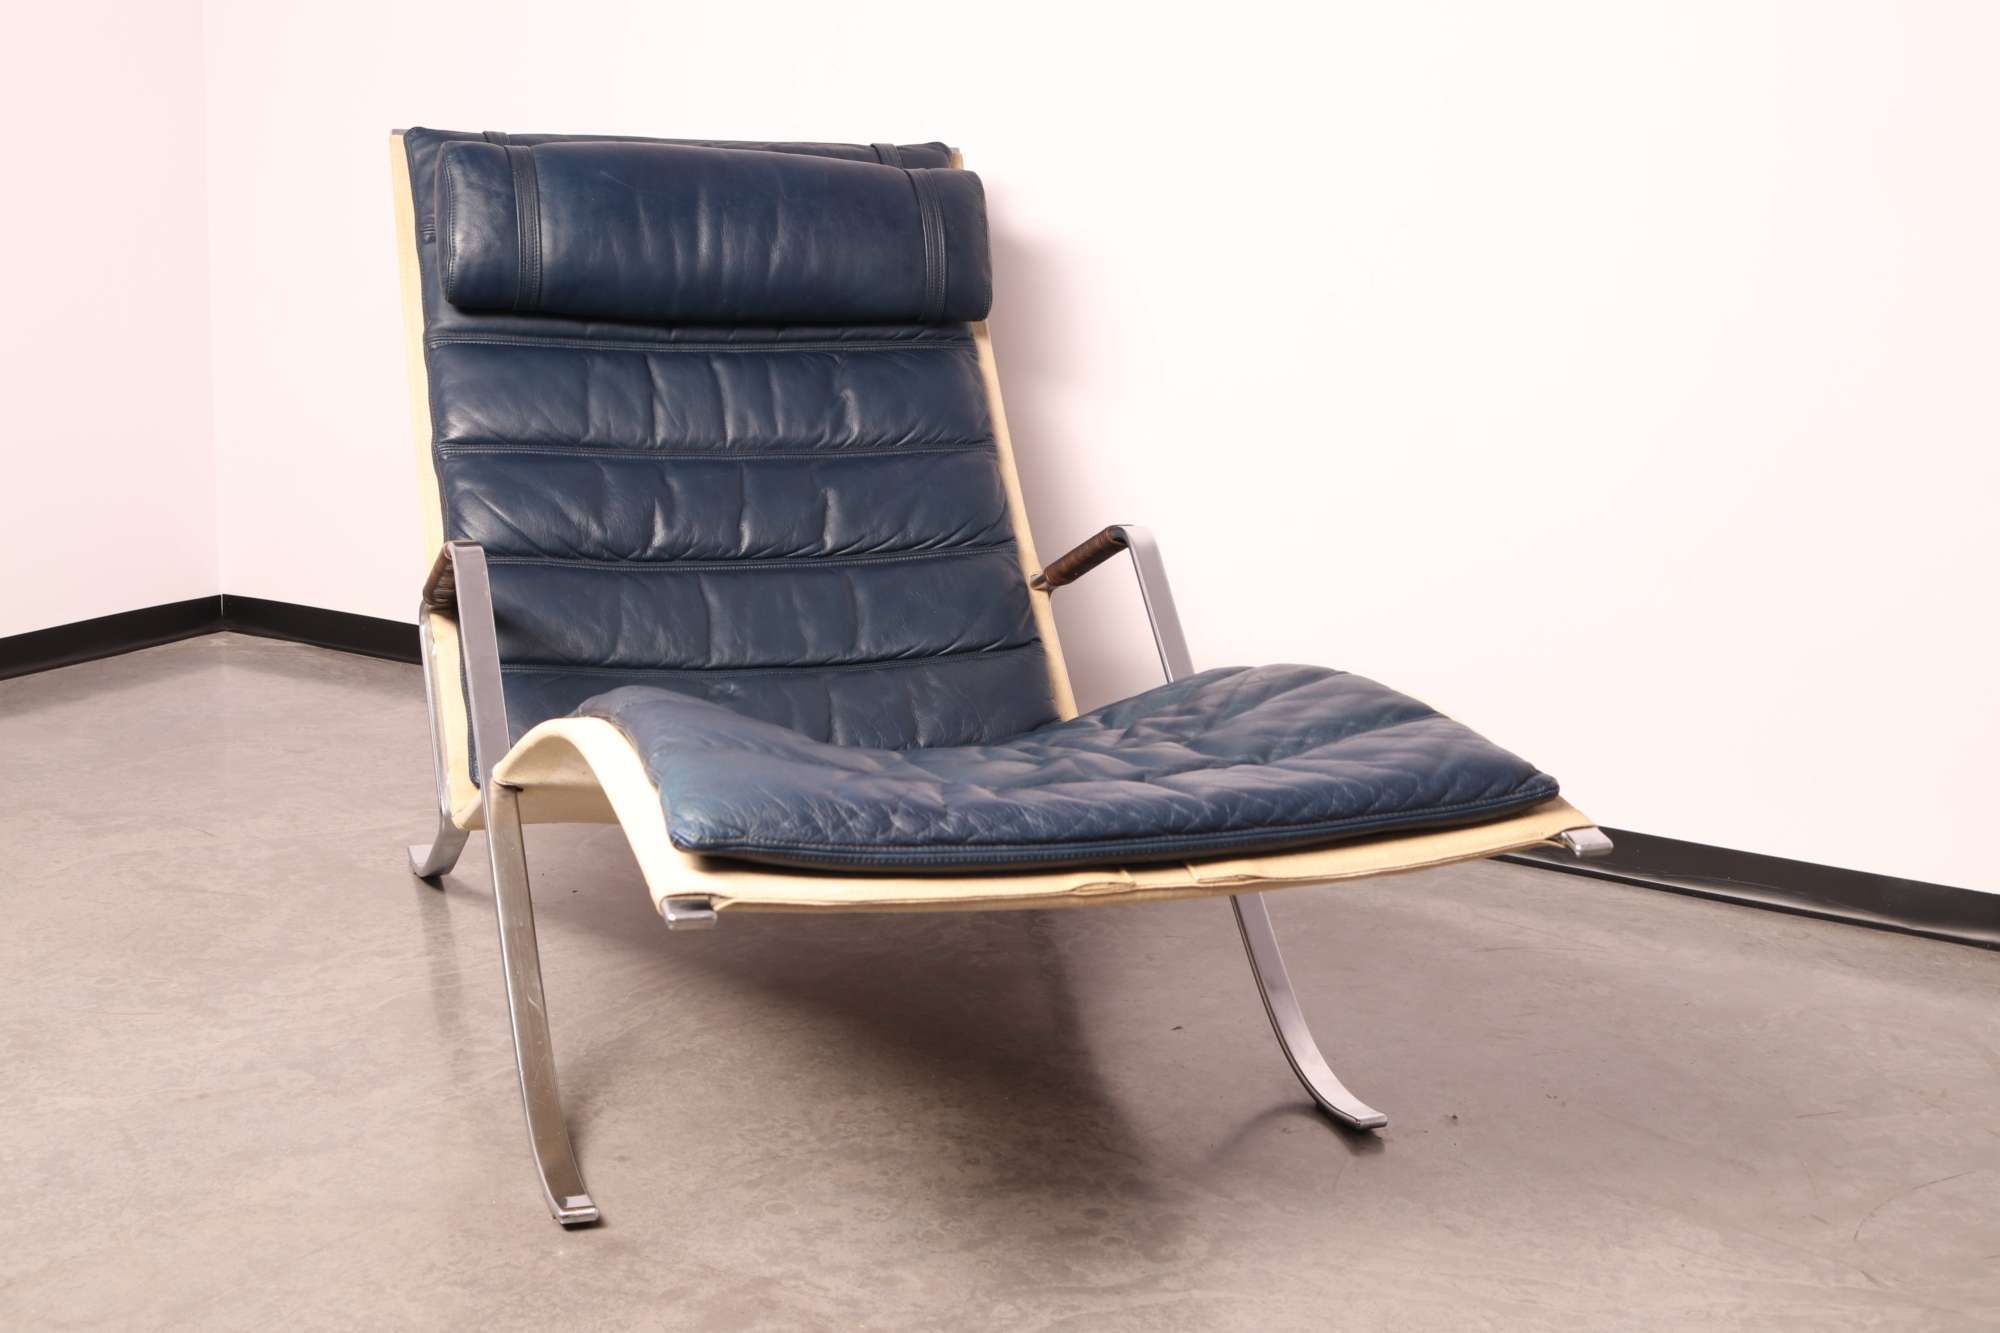 Grasshopper lounge chair vintage FK 87 Danish design iconic rare (1)